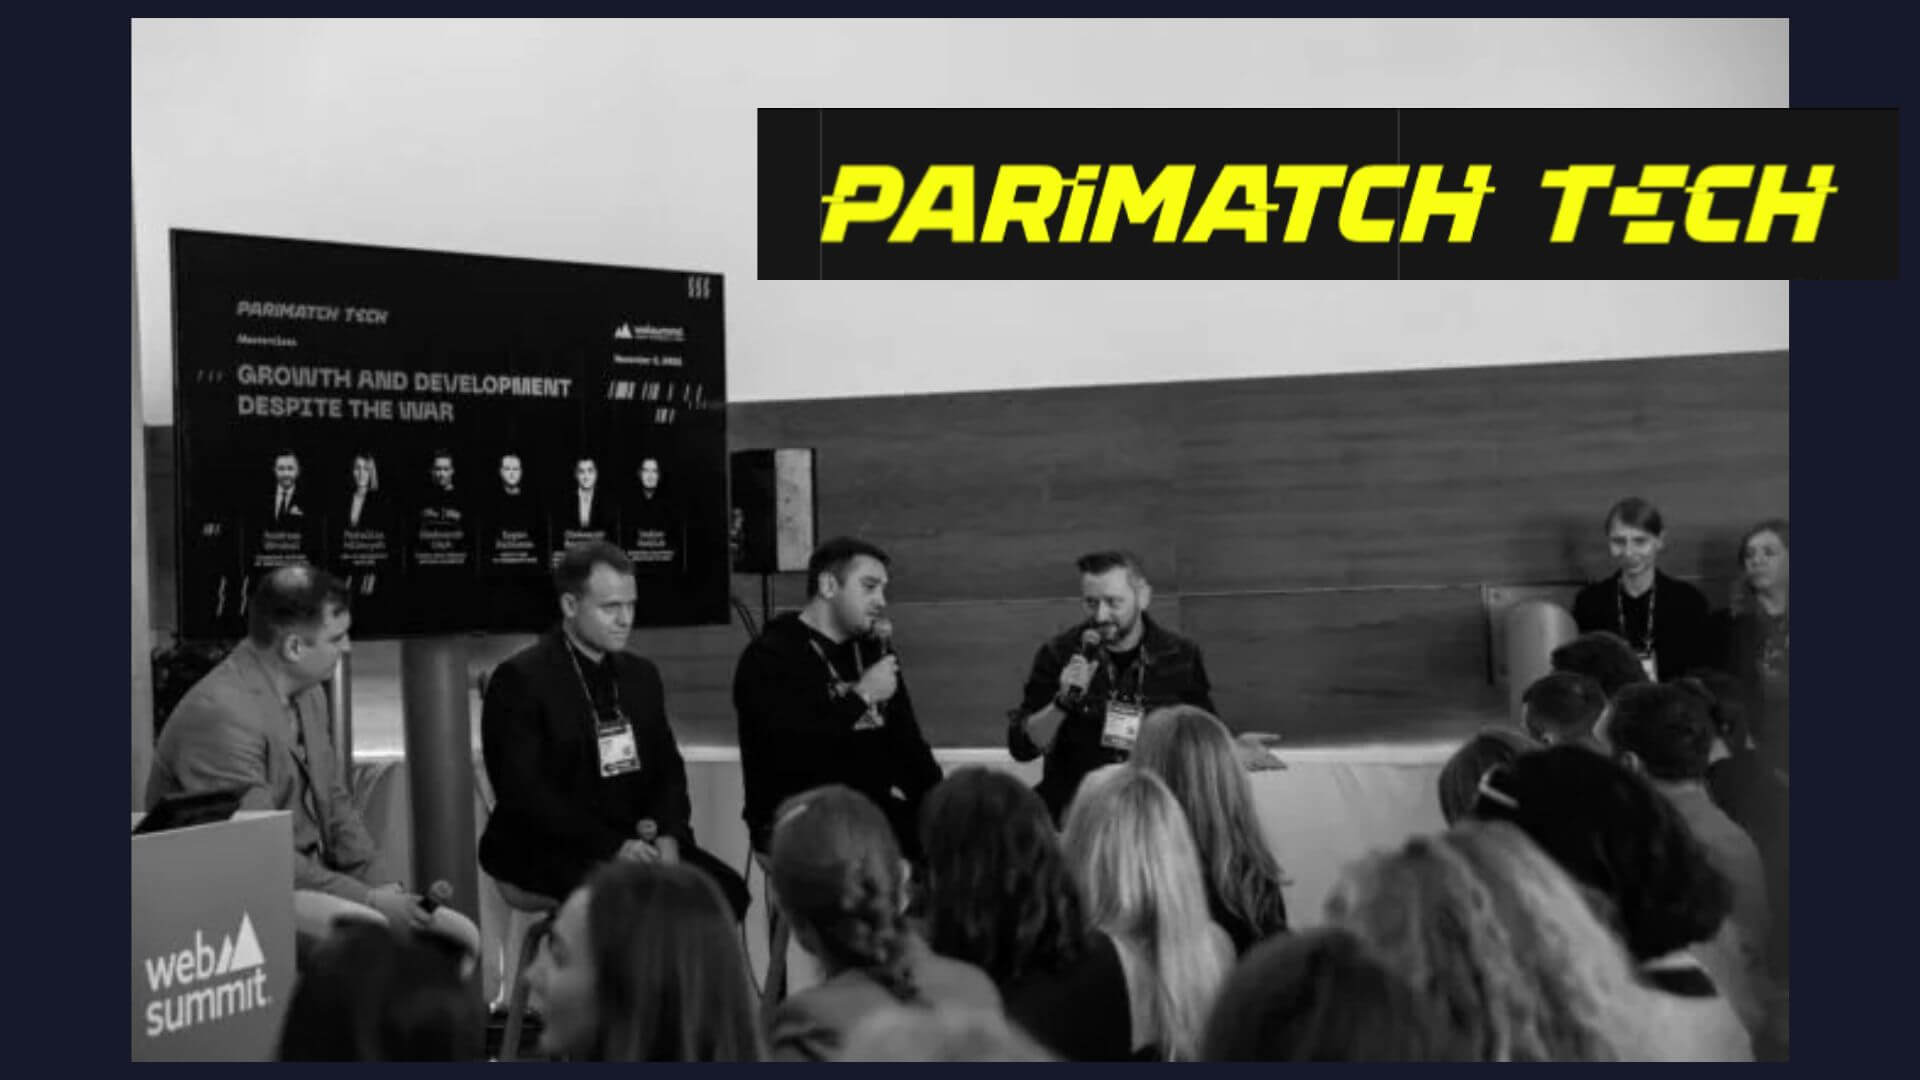 Parimatch Tech Holds “Growth and Development Despite the War” Panel on Ukraine